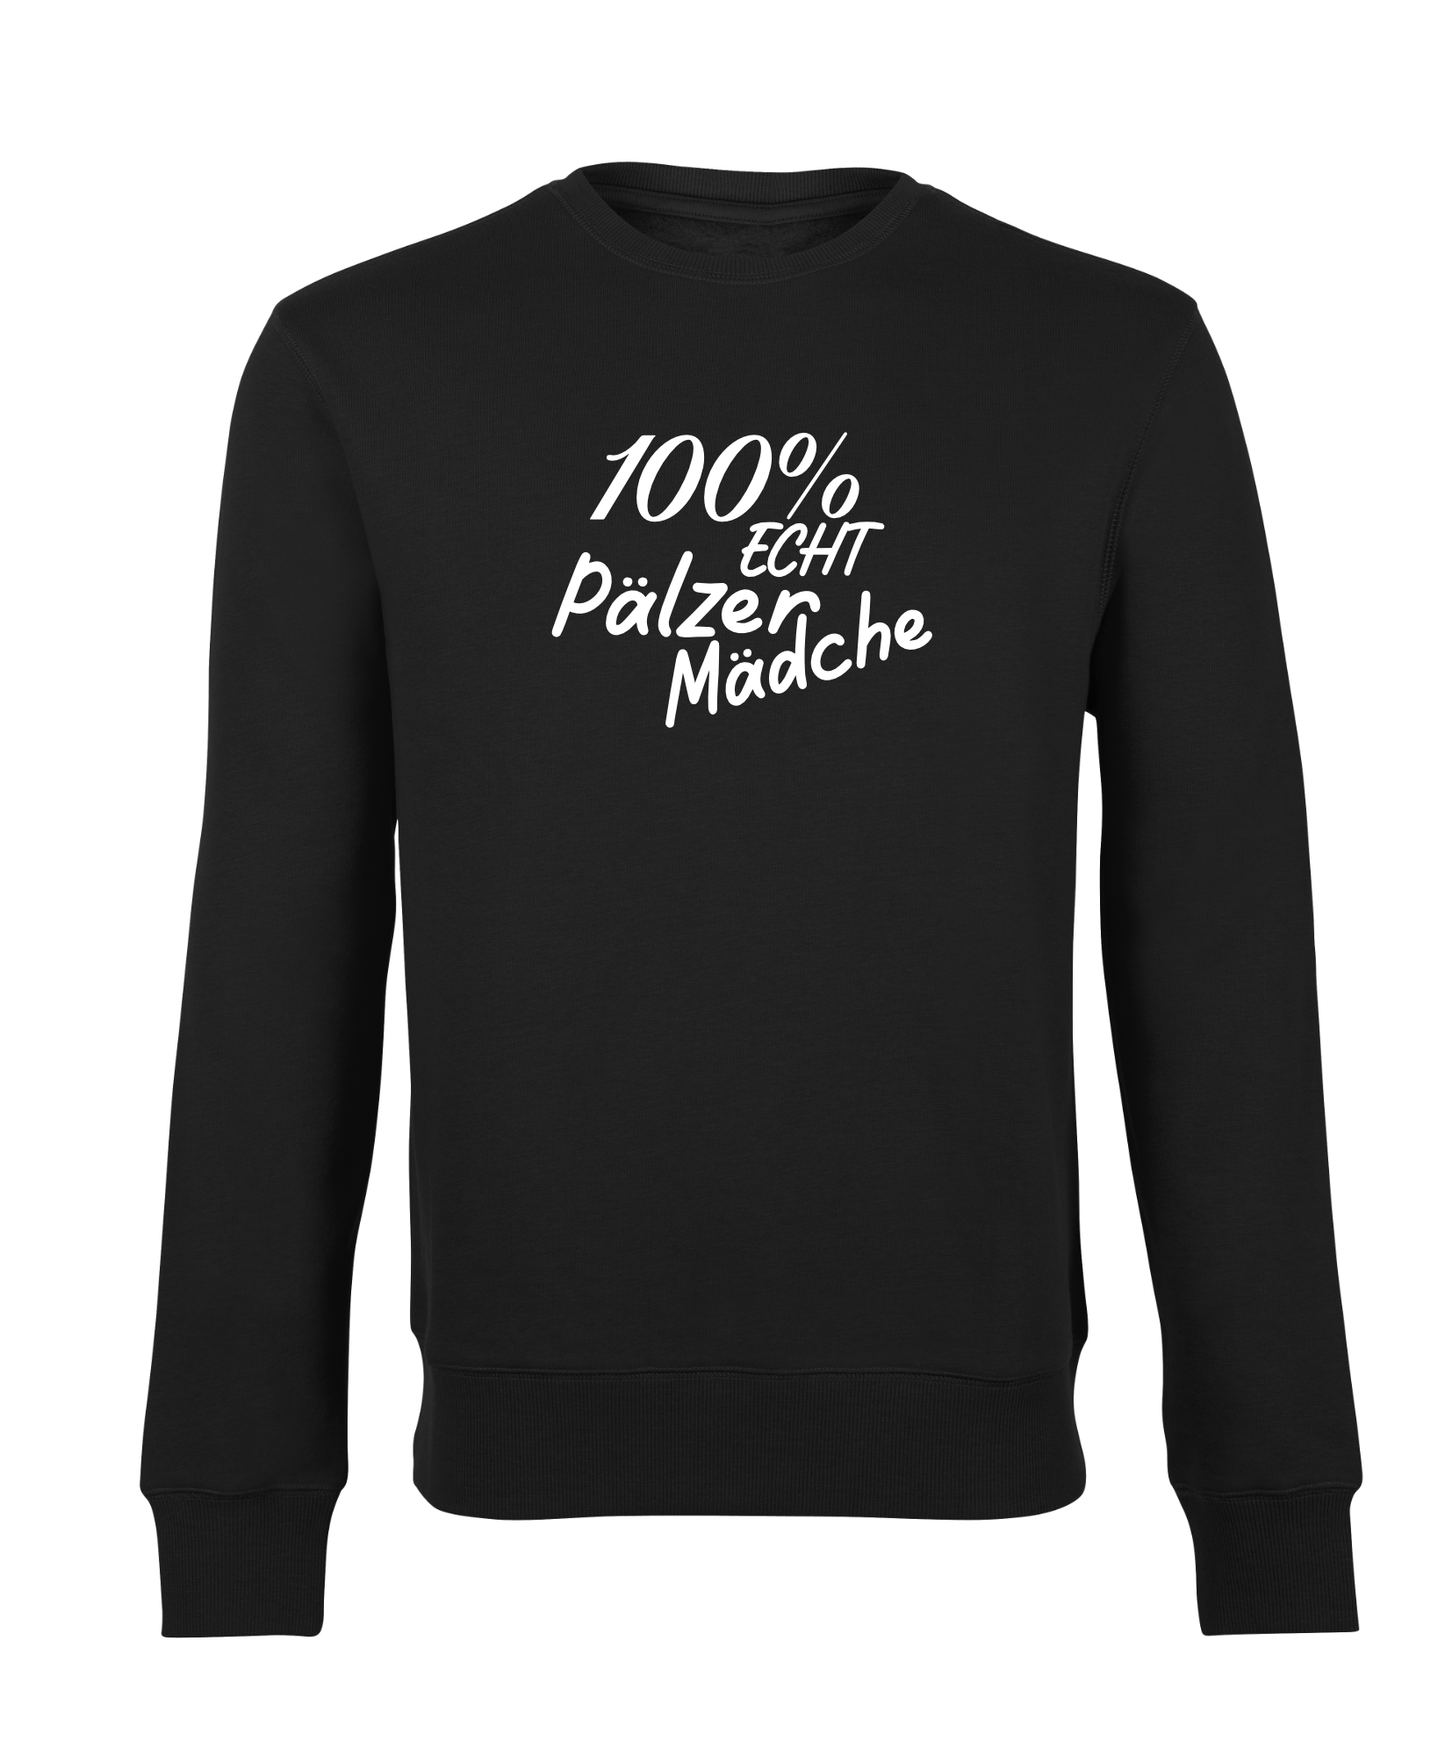 100% Pälzer Mädche pREHmium - Sweatshirts